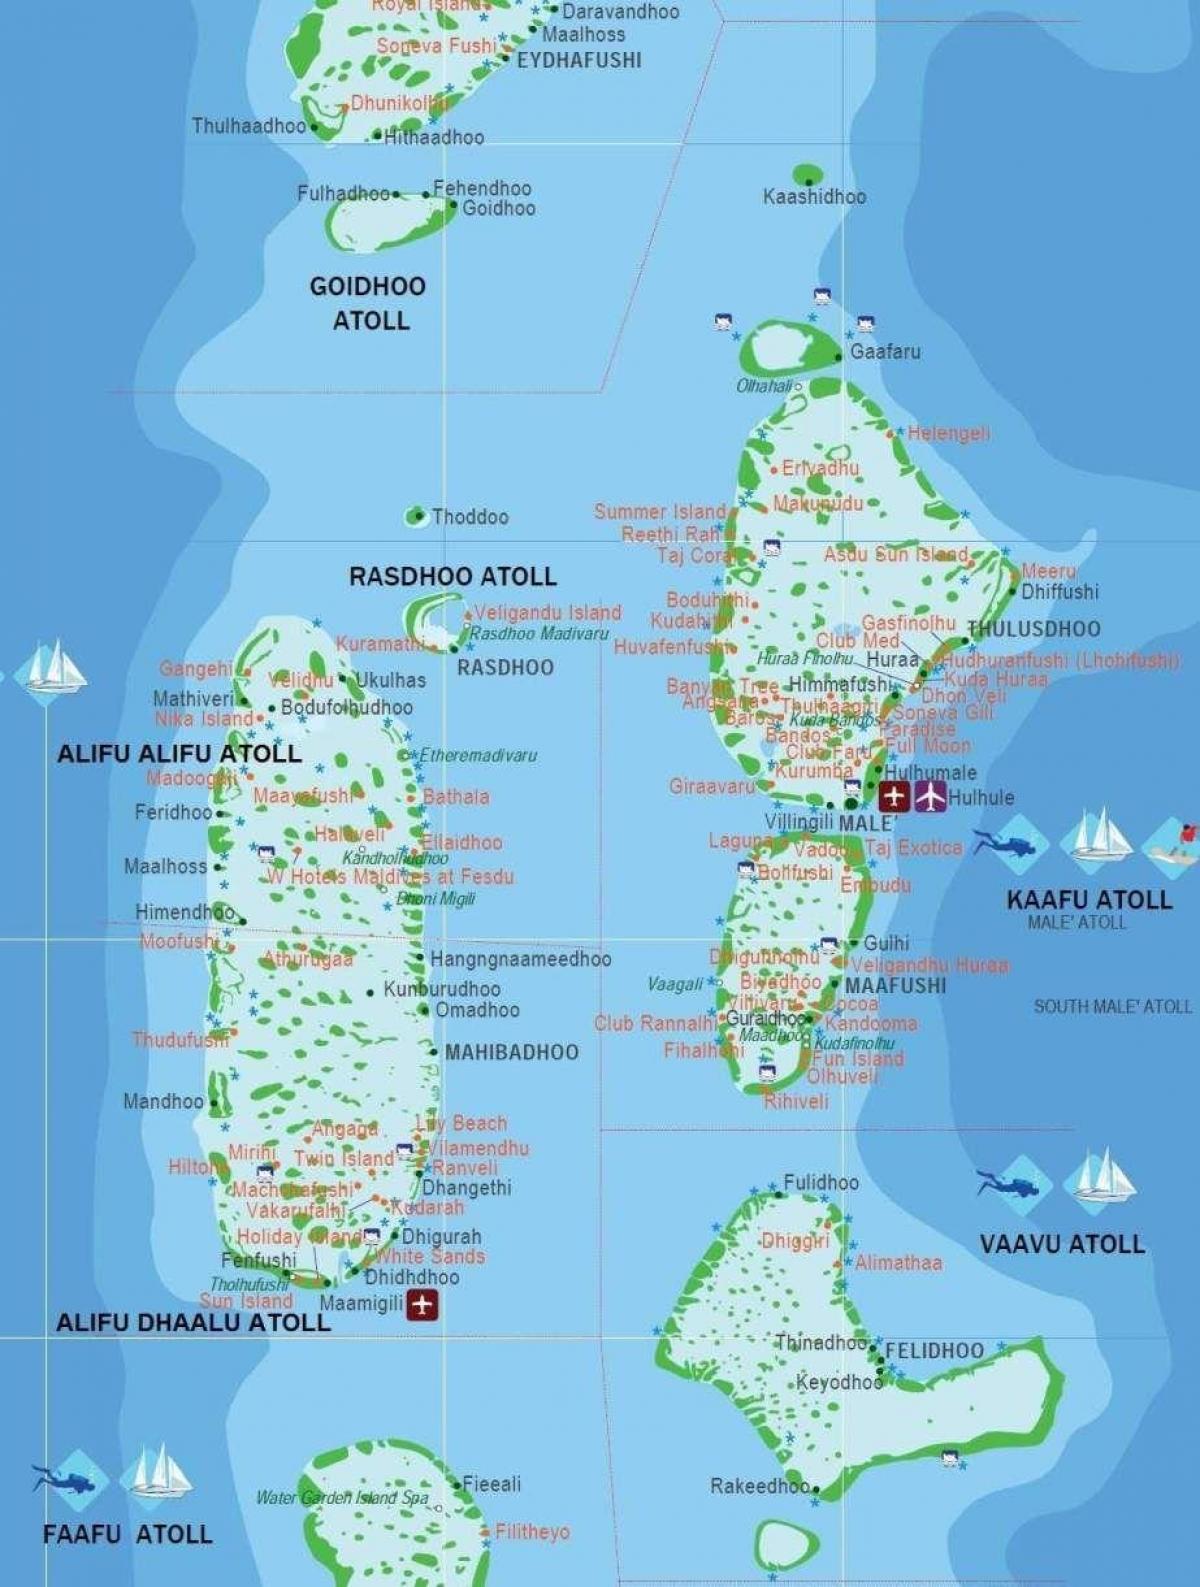 Karte von Malediven Touristen